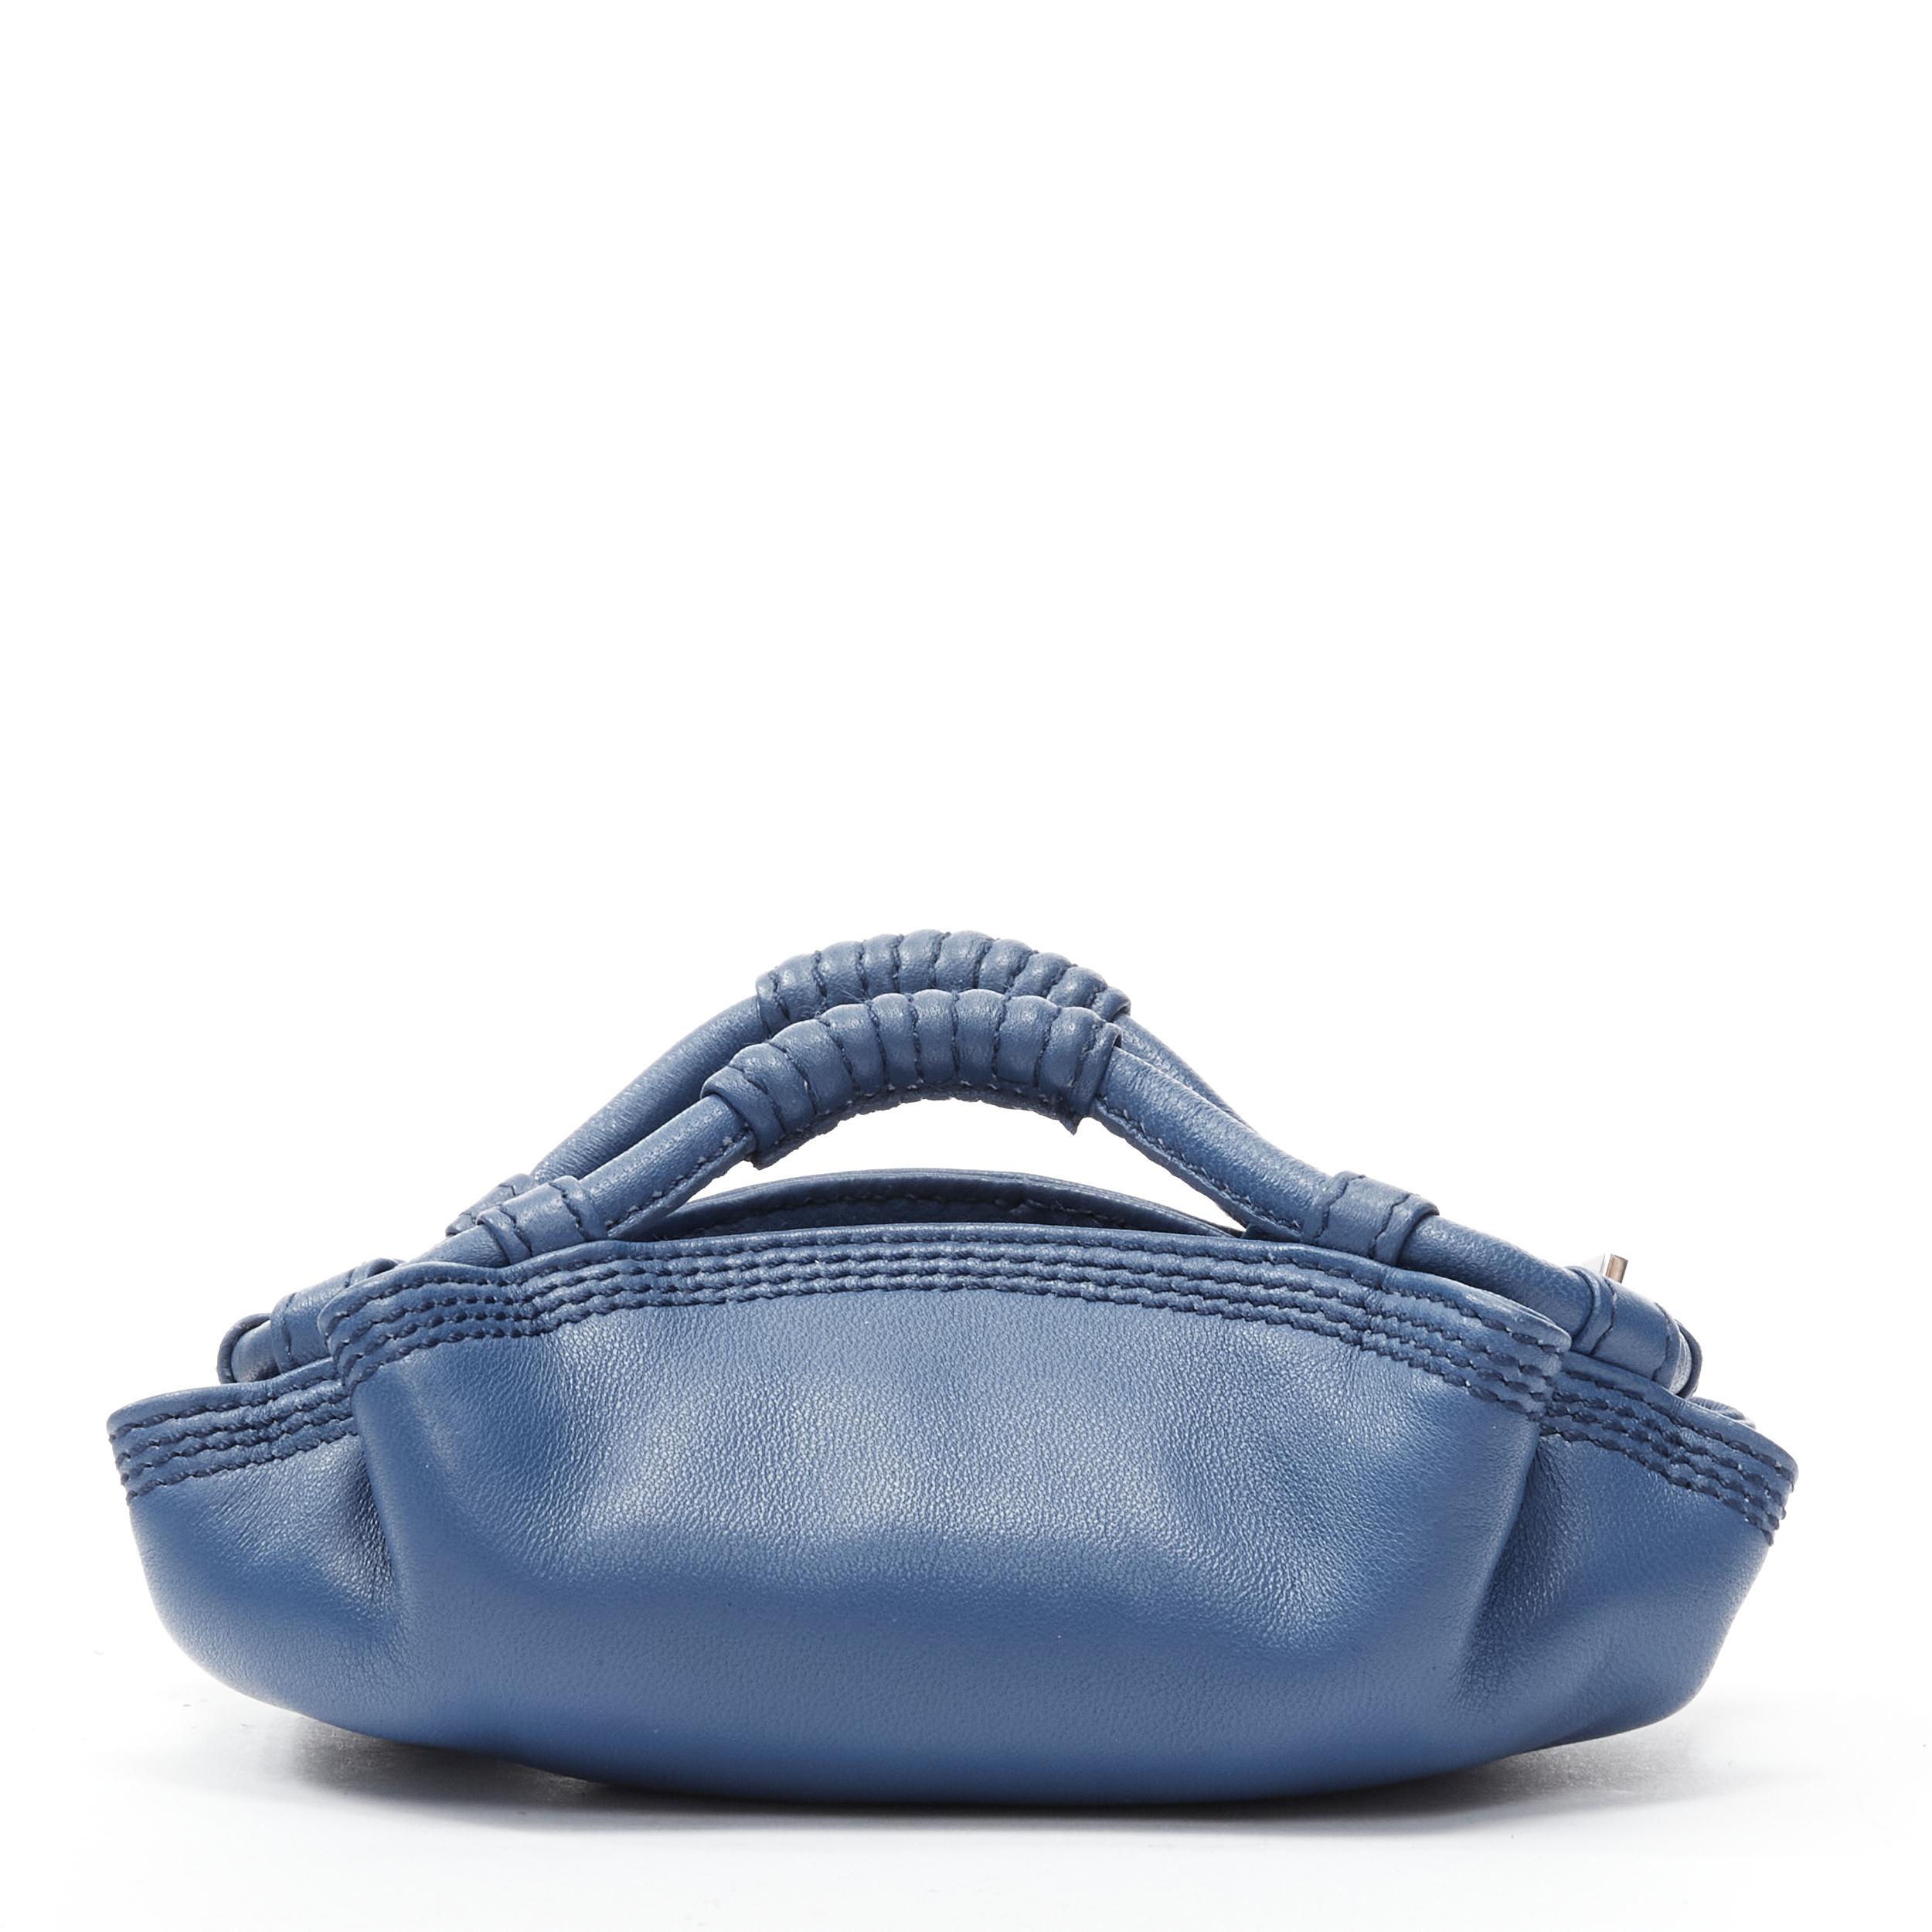 Blue LOEWE Nano Aire Brisa blue nappa leather micro bag coin purse pouch